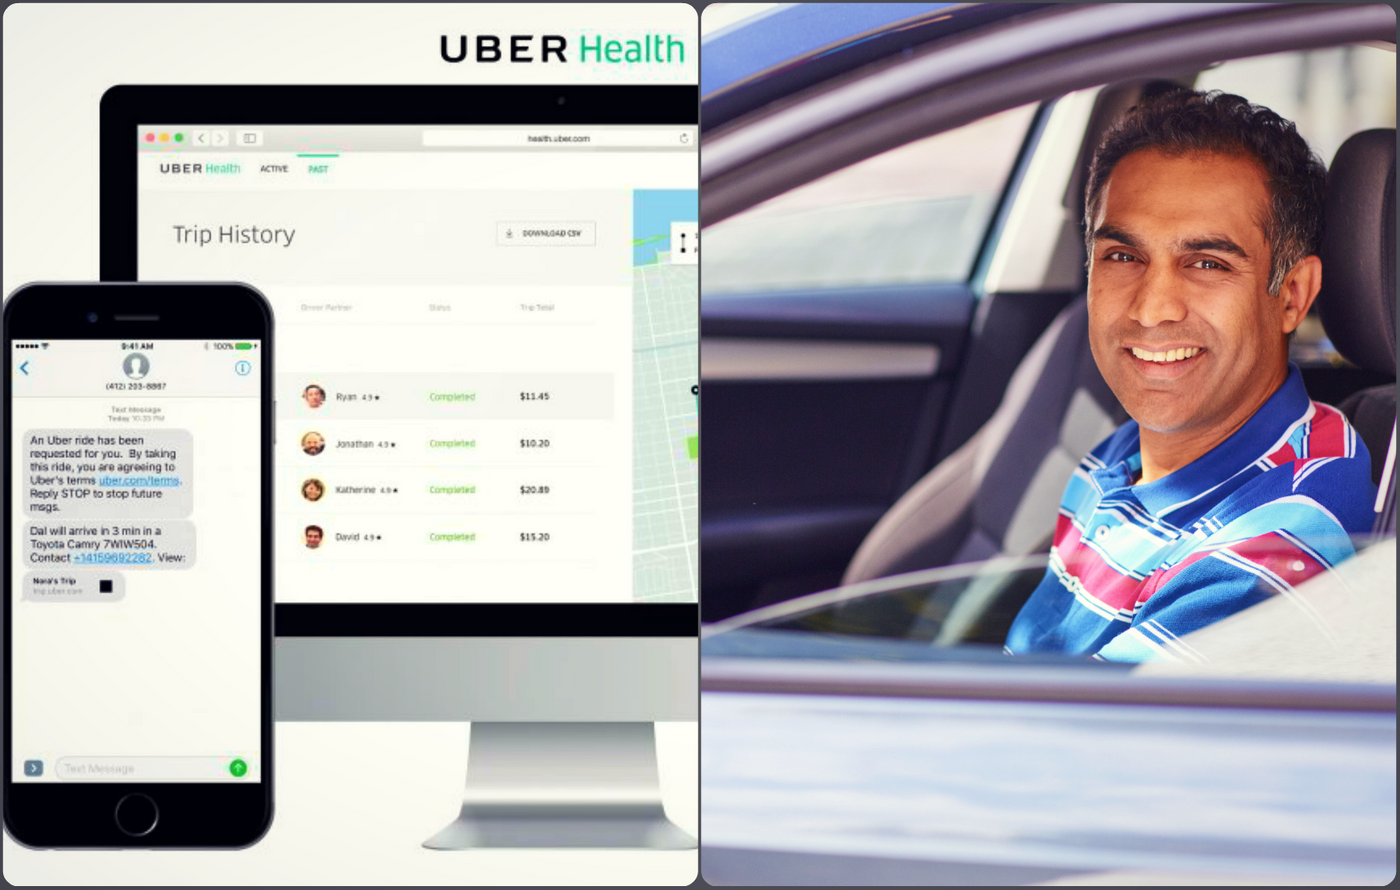 Uber driver and Uber Health images, credit: Uber